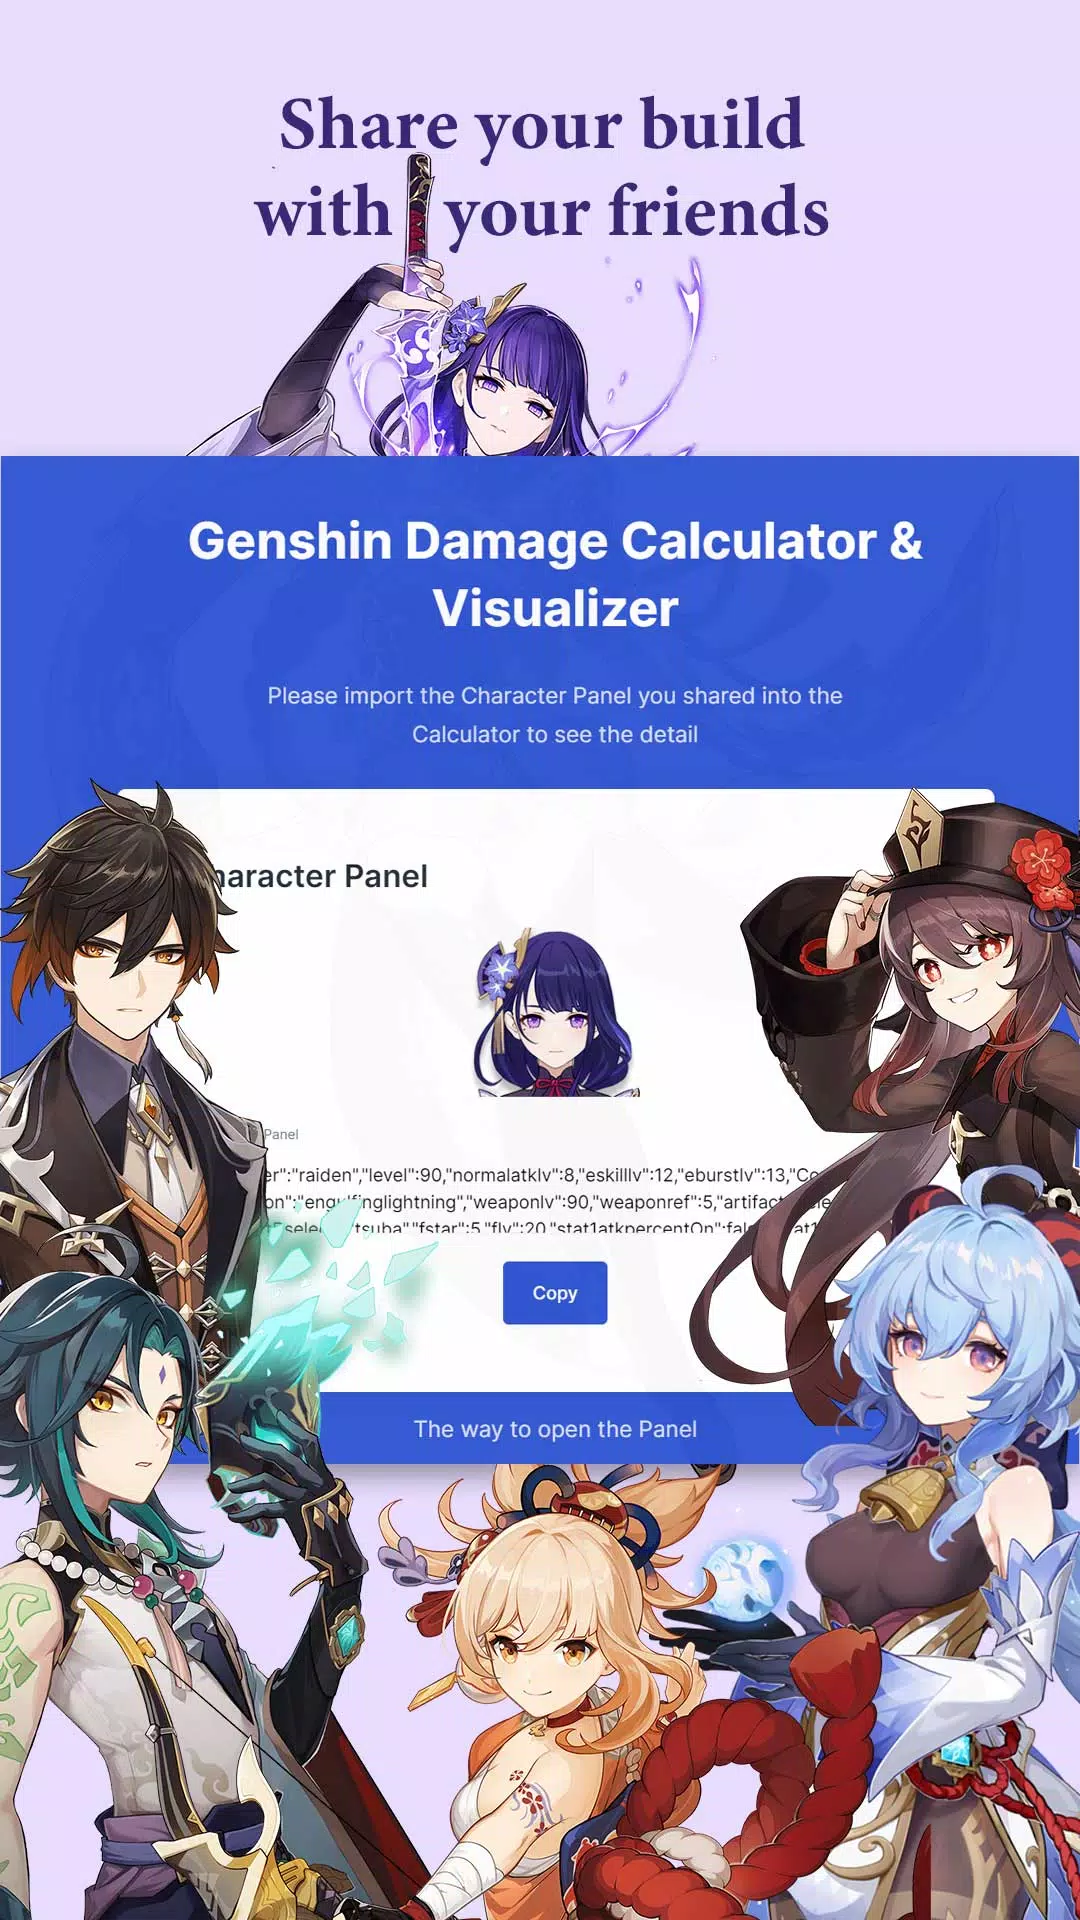 Genshin Damage Calculator & Visualizer